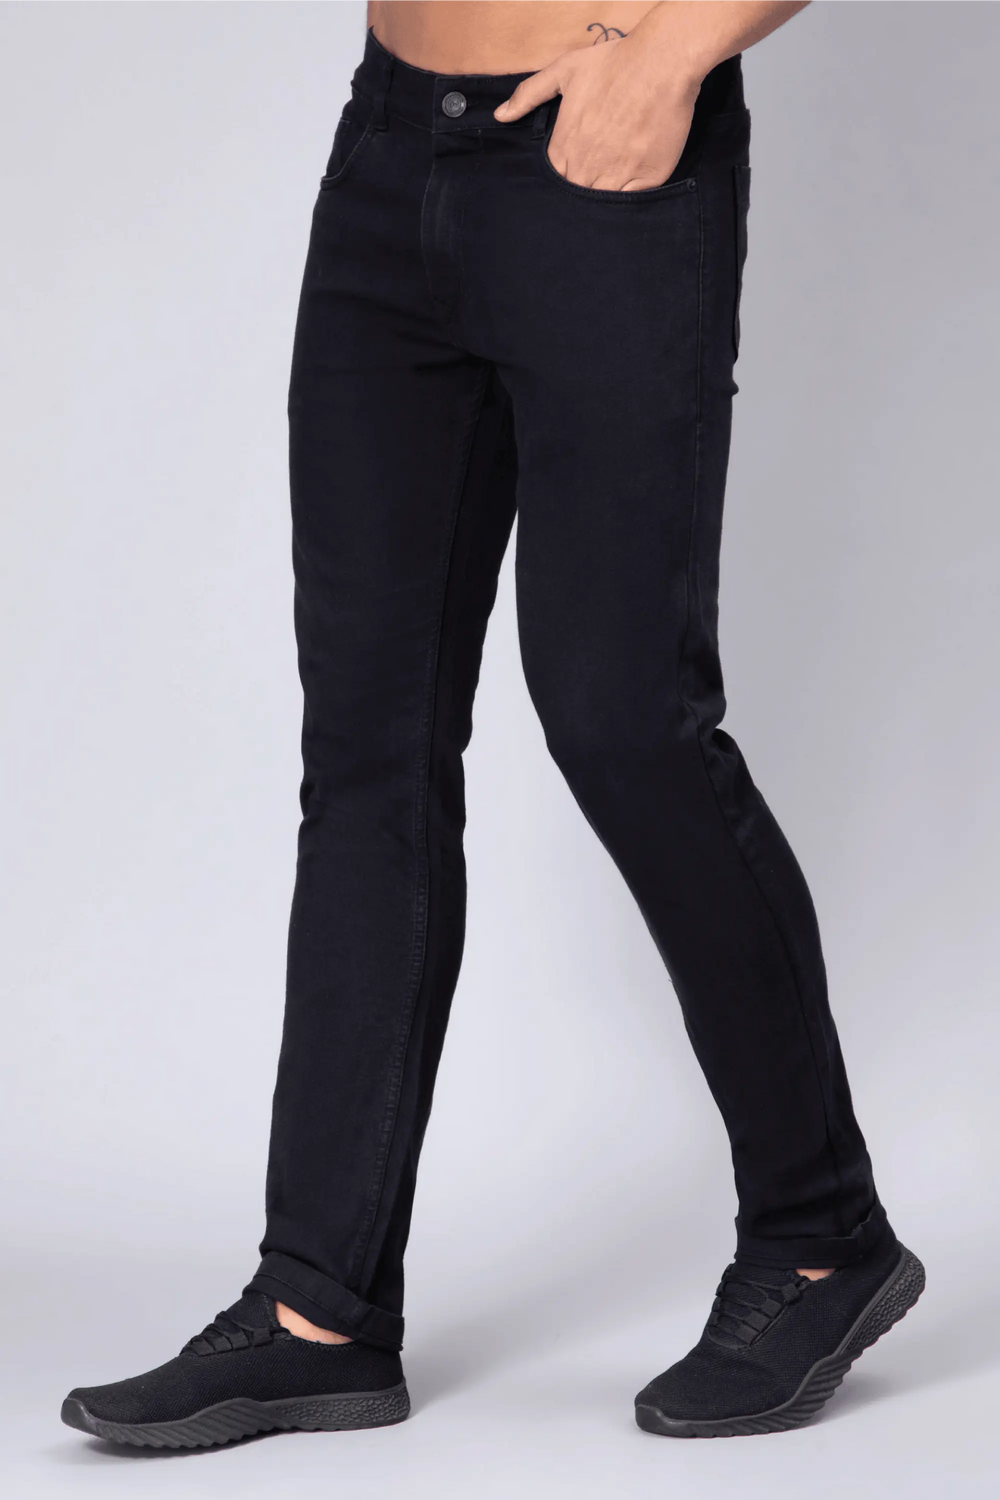 Slim Tapered Fit Z Black Premium Denim Jeans For Men - Peplos Jeans 